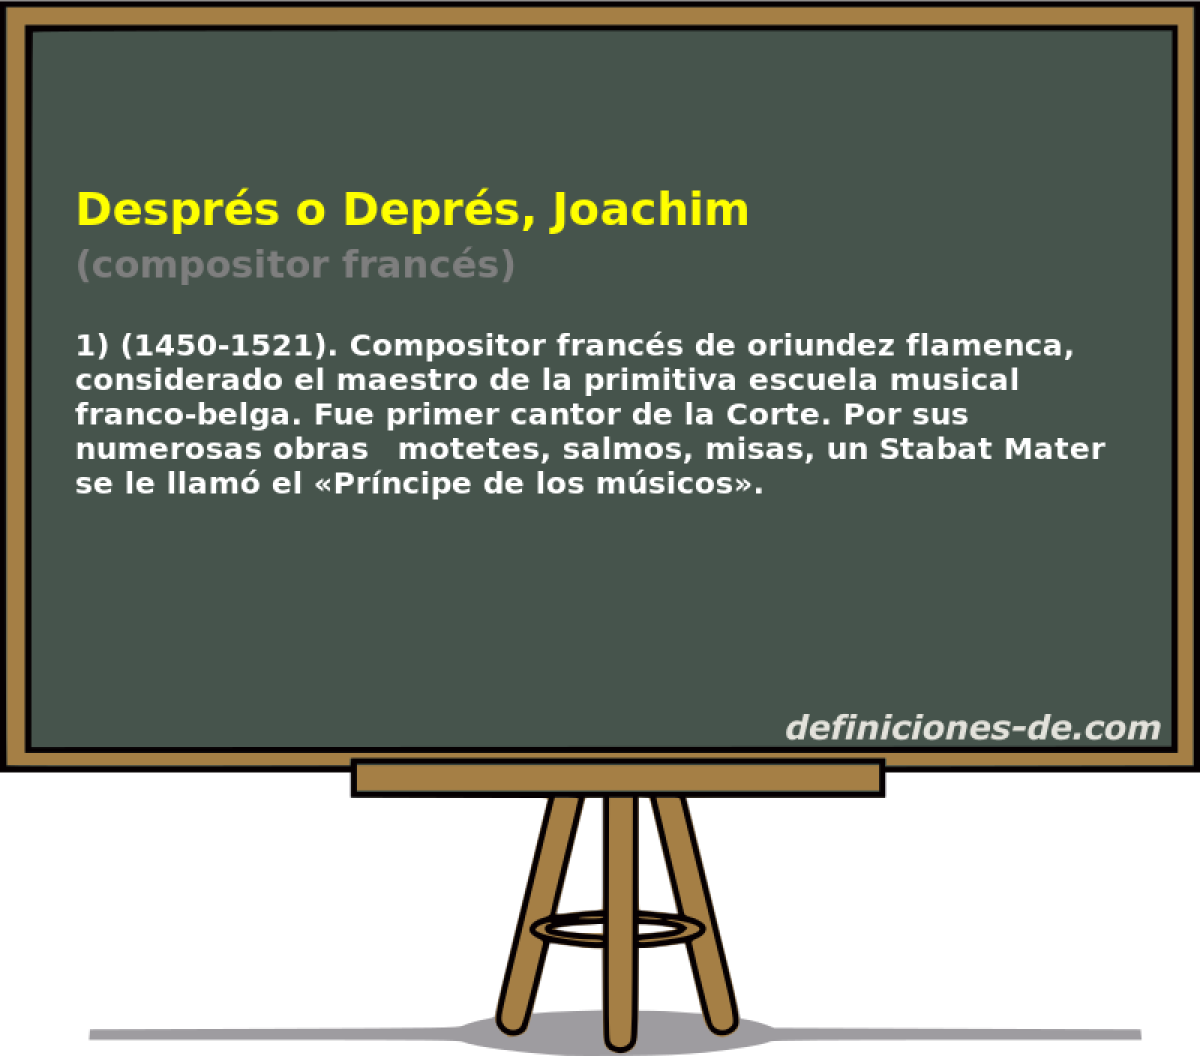 Desprs o Deprs, Joachim (compositor francs)